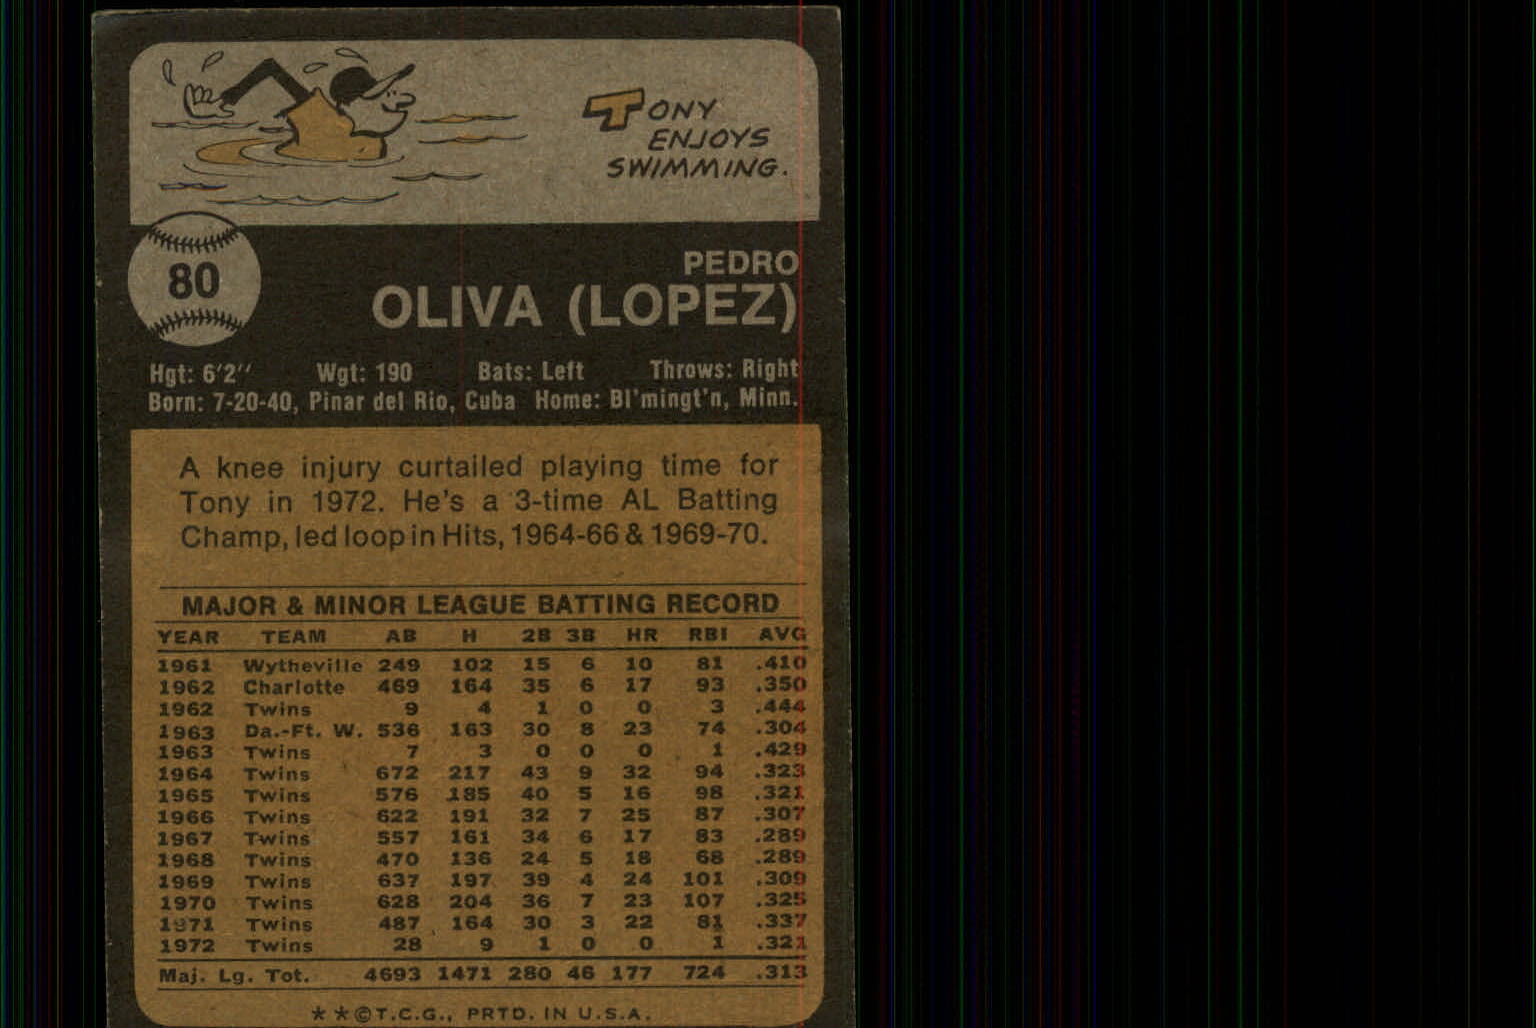 1973 Topps #80 Tony Oliva UER/Minnseota on front back image